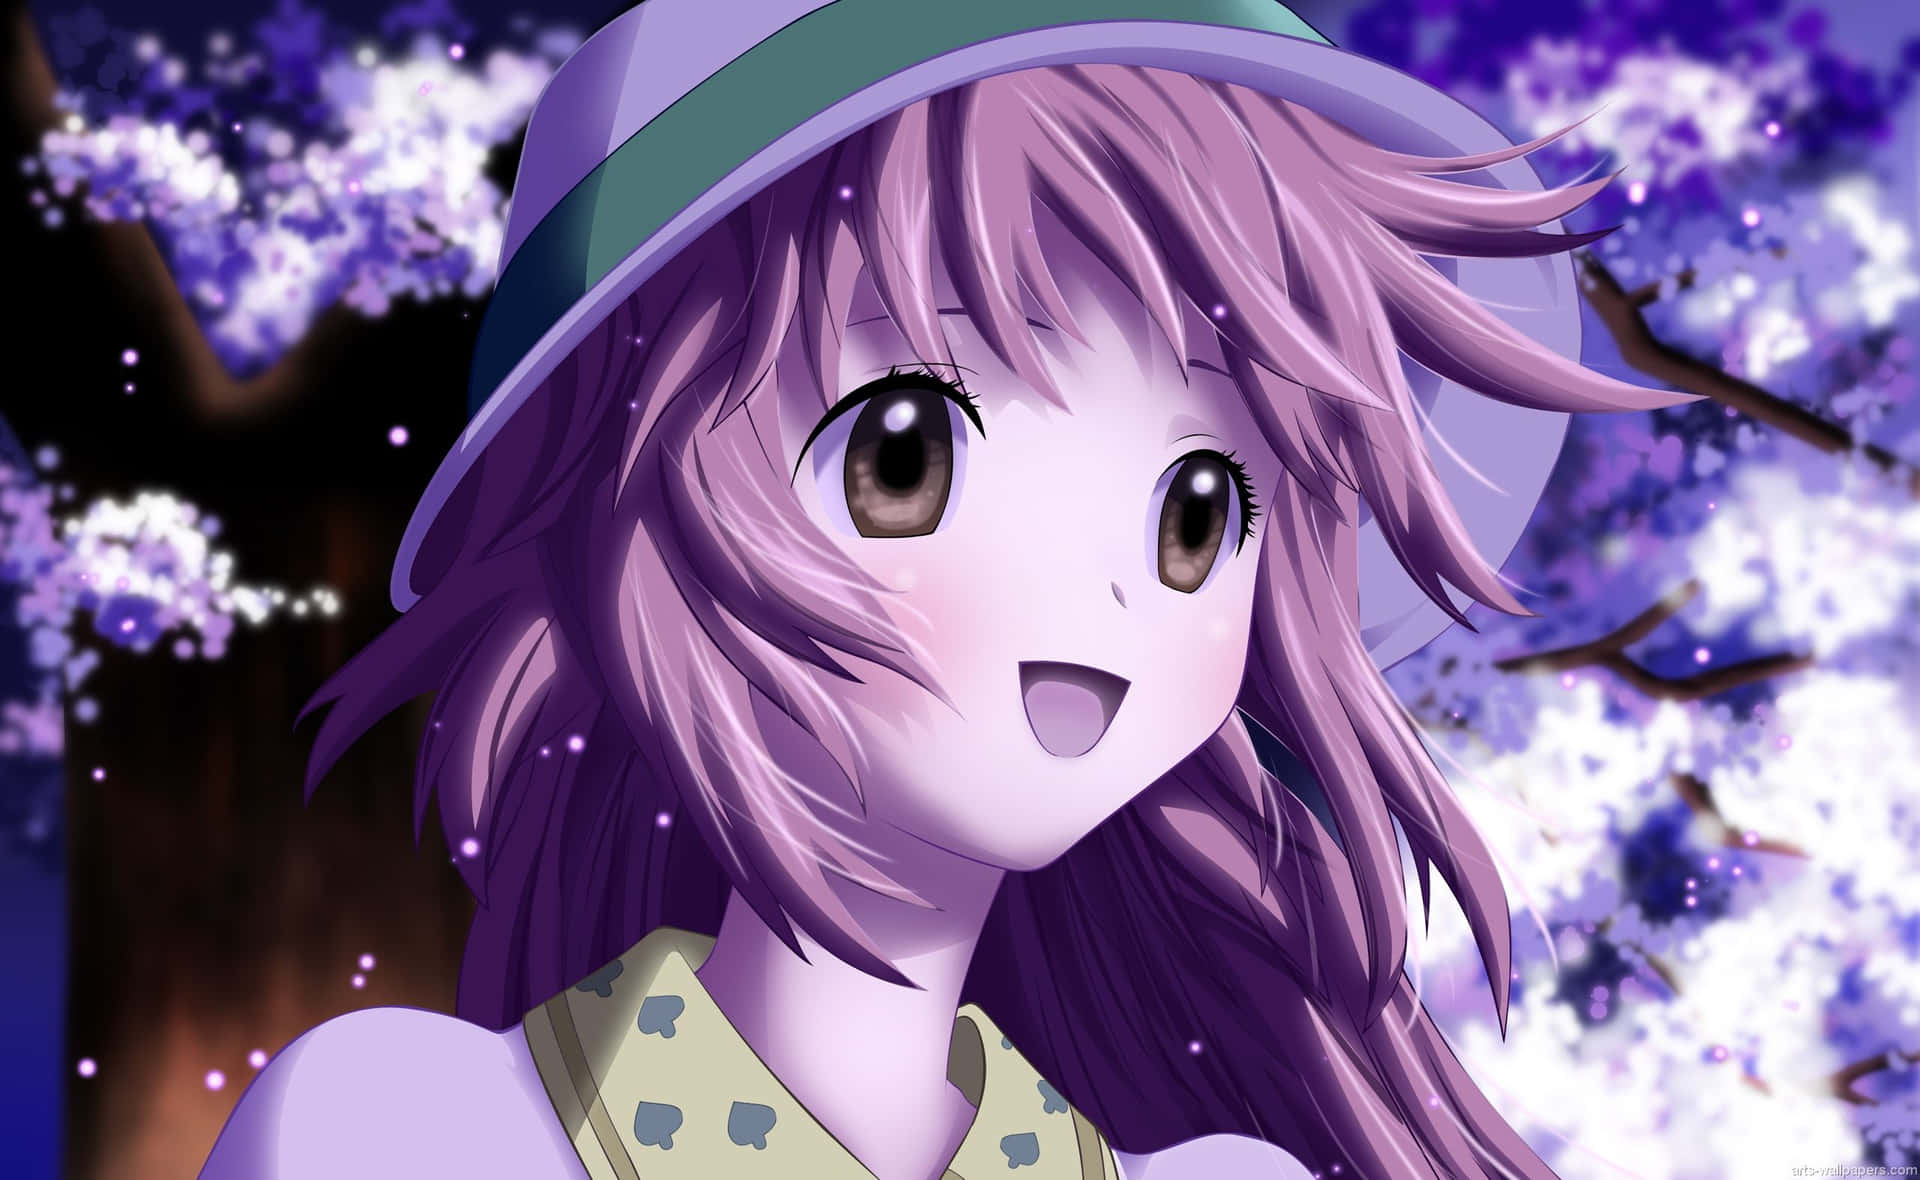 Smiling Kobato With Lavender Anime Cartoon Wallpaper